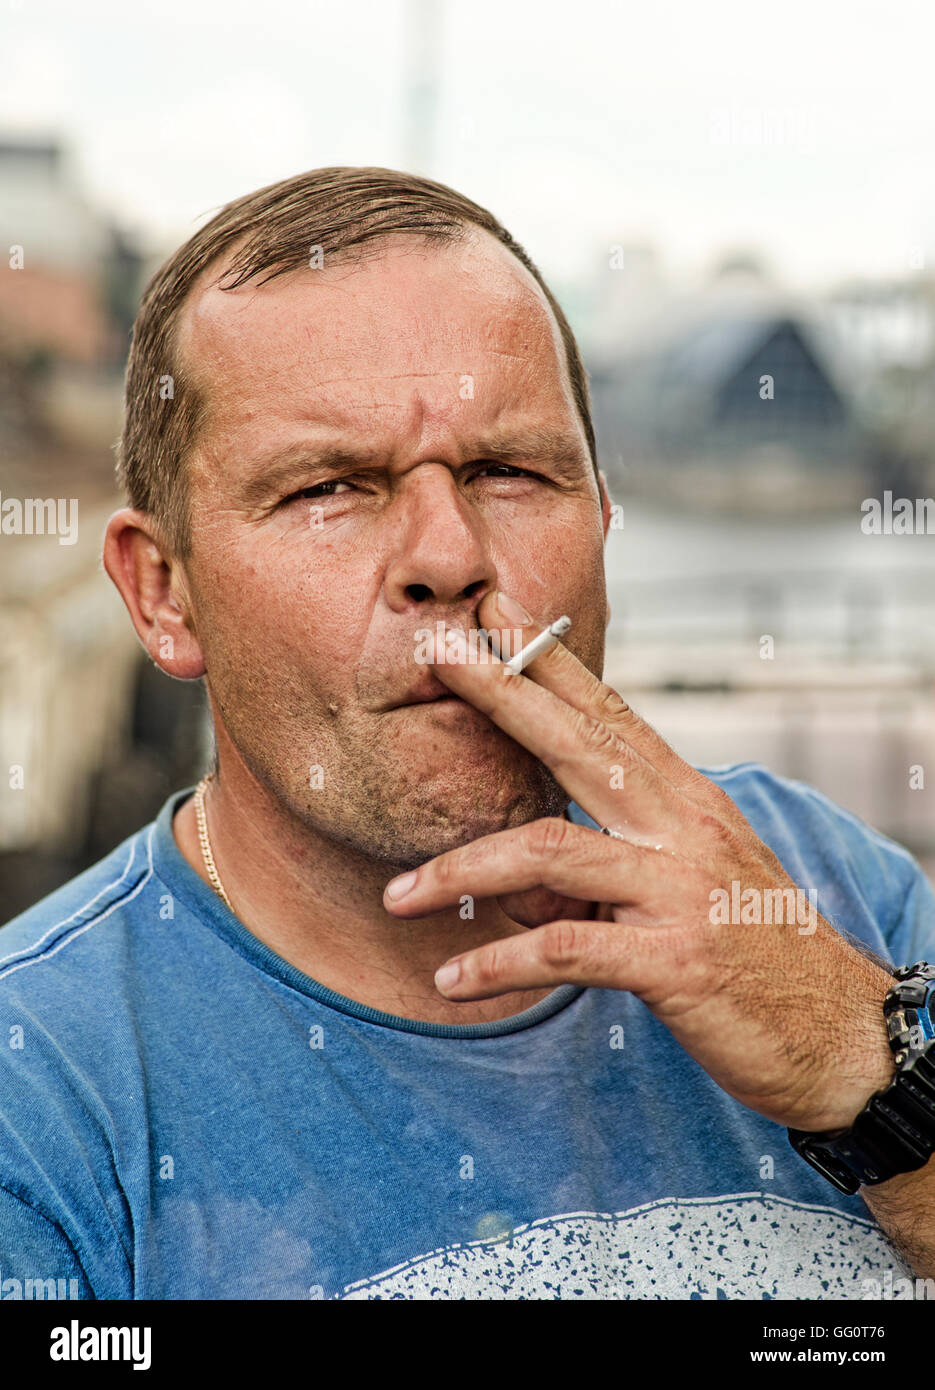 Working man Smoking a cigarette Stock Photo